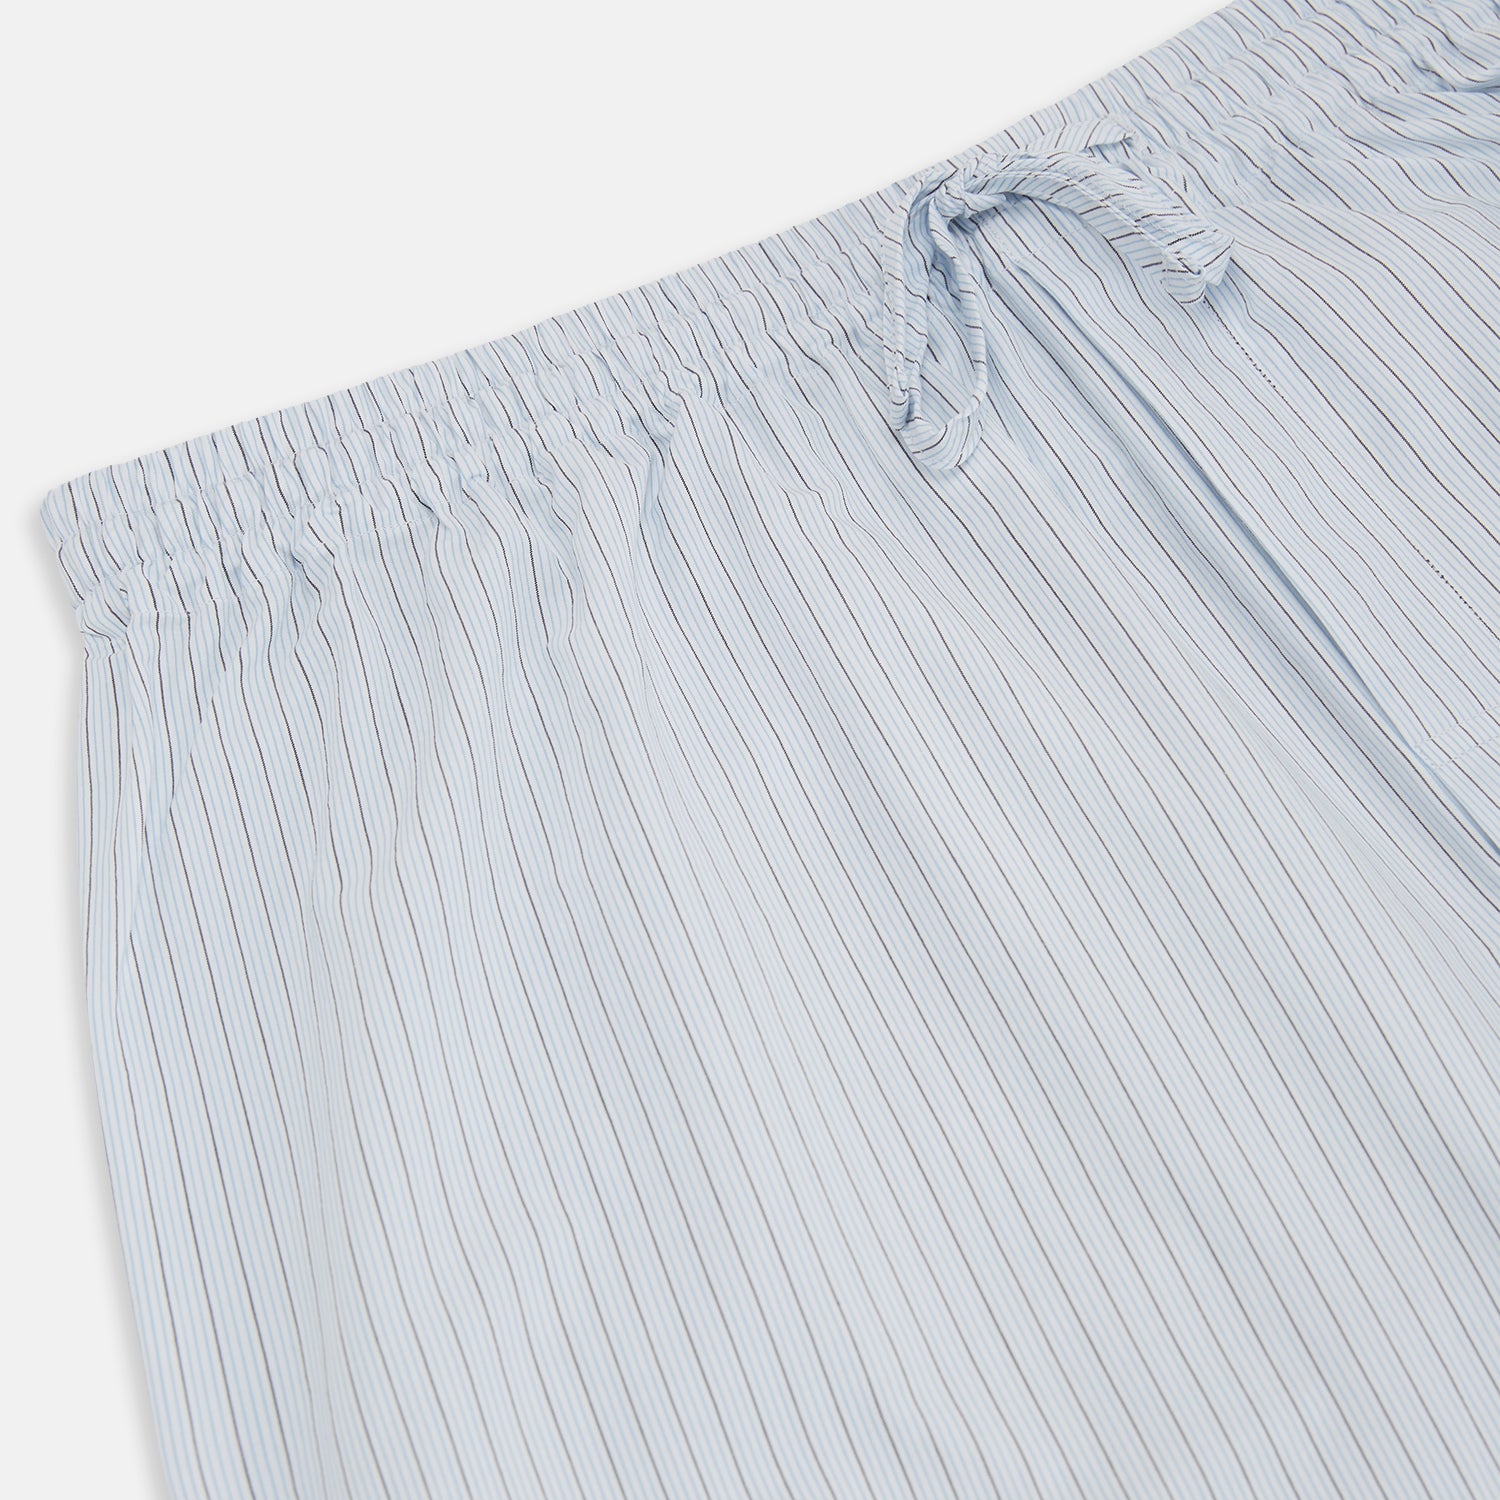 Blue Multi Pinstripe Pyjama Trousers